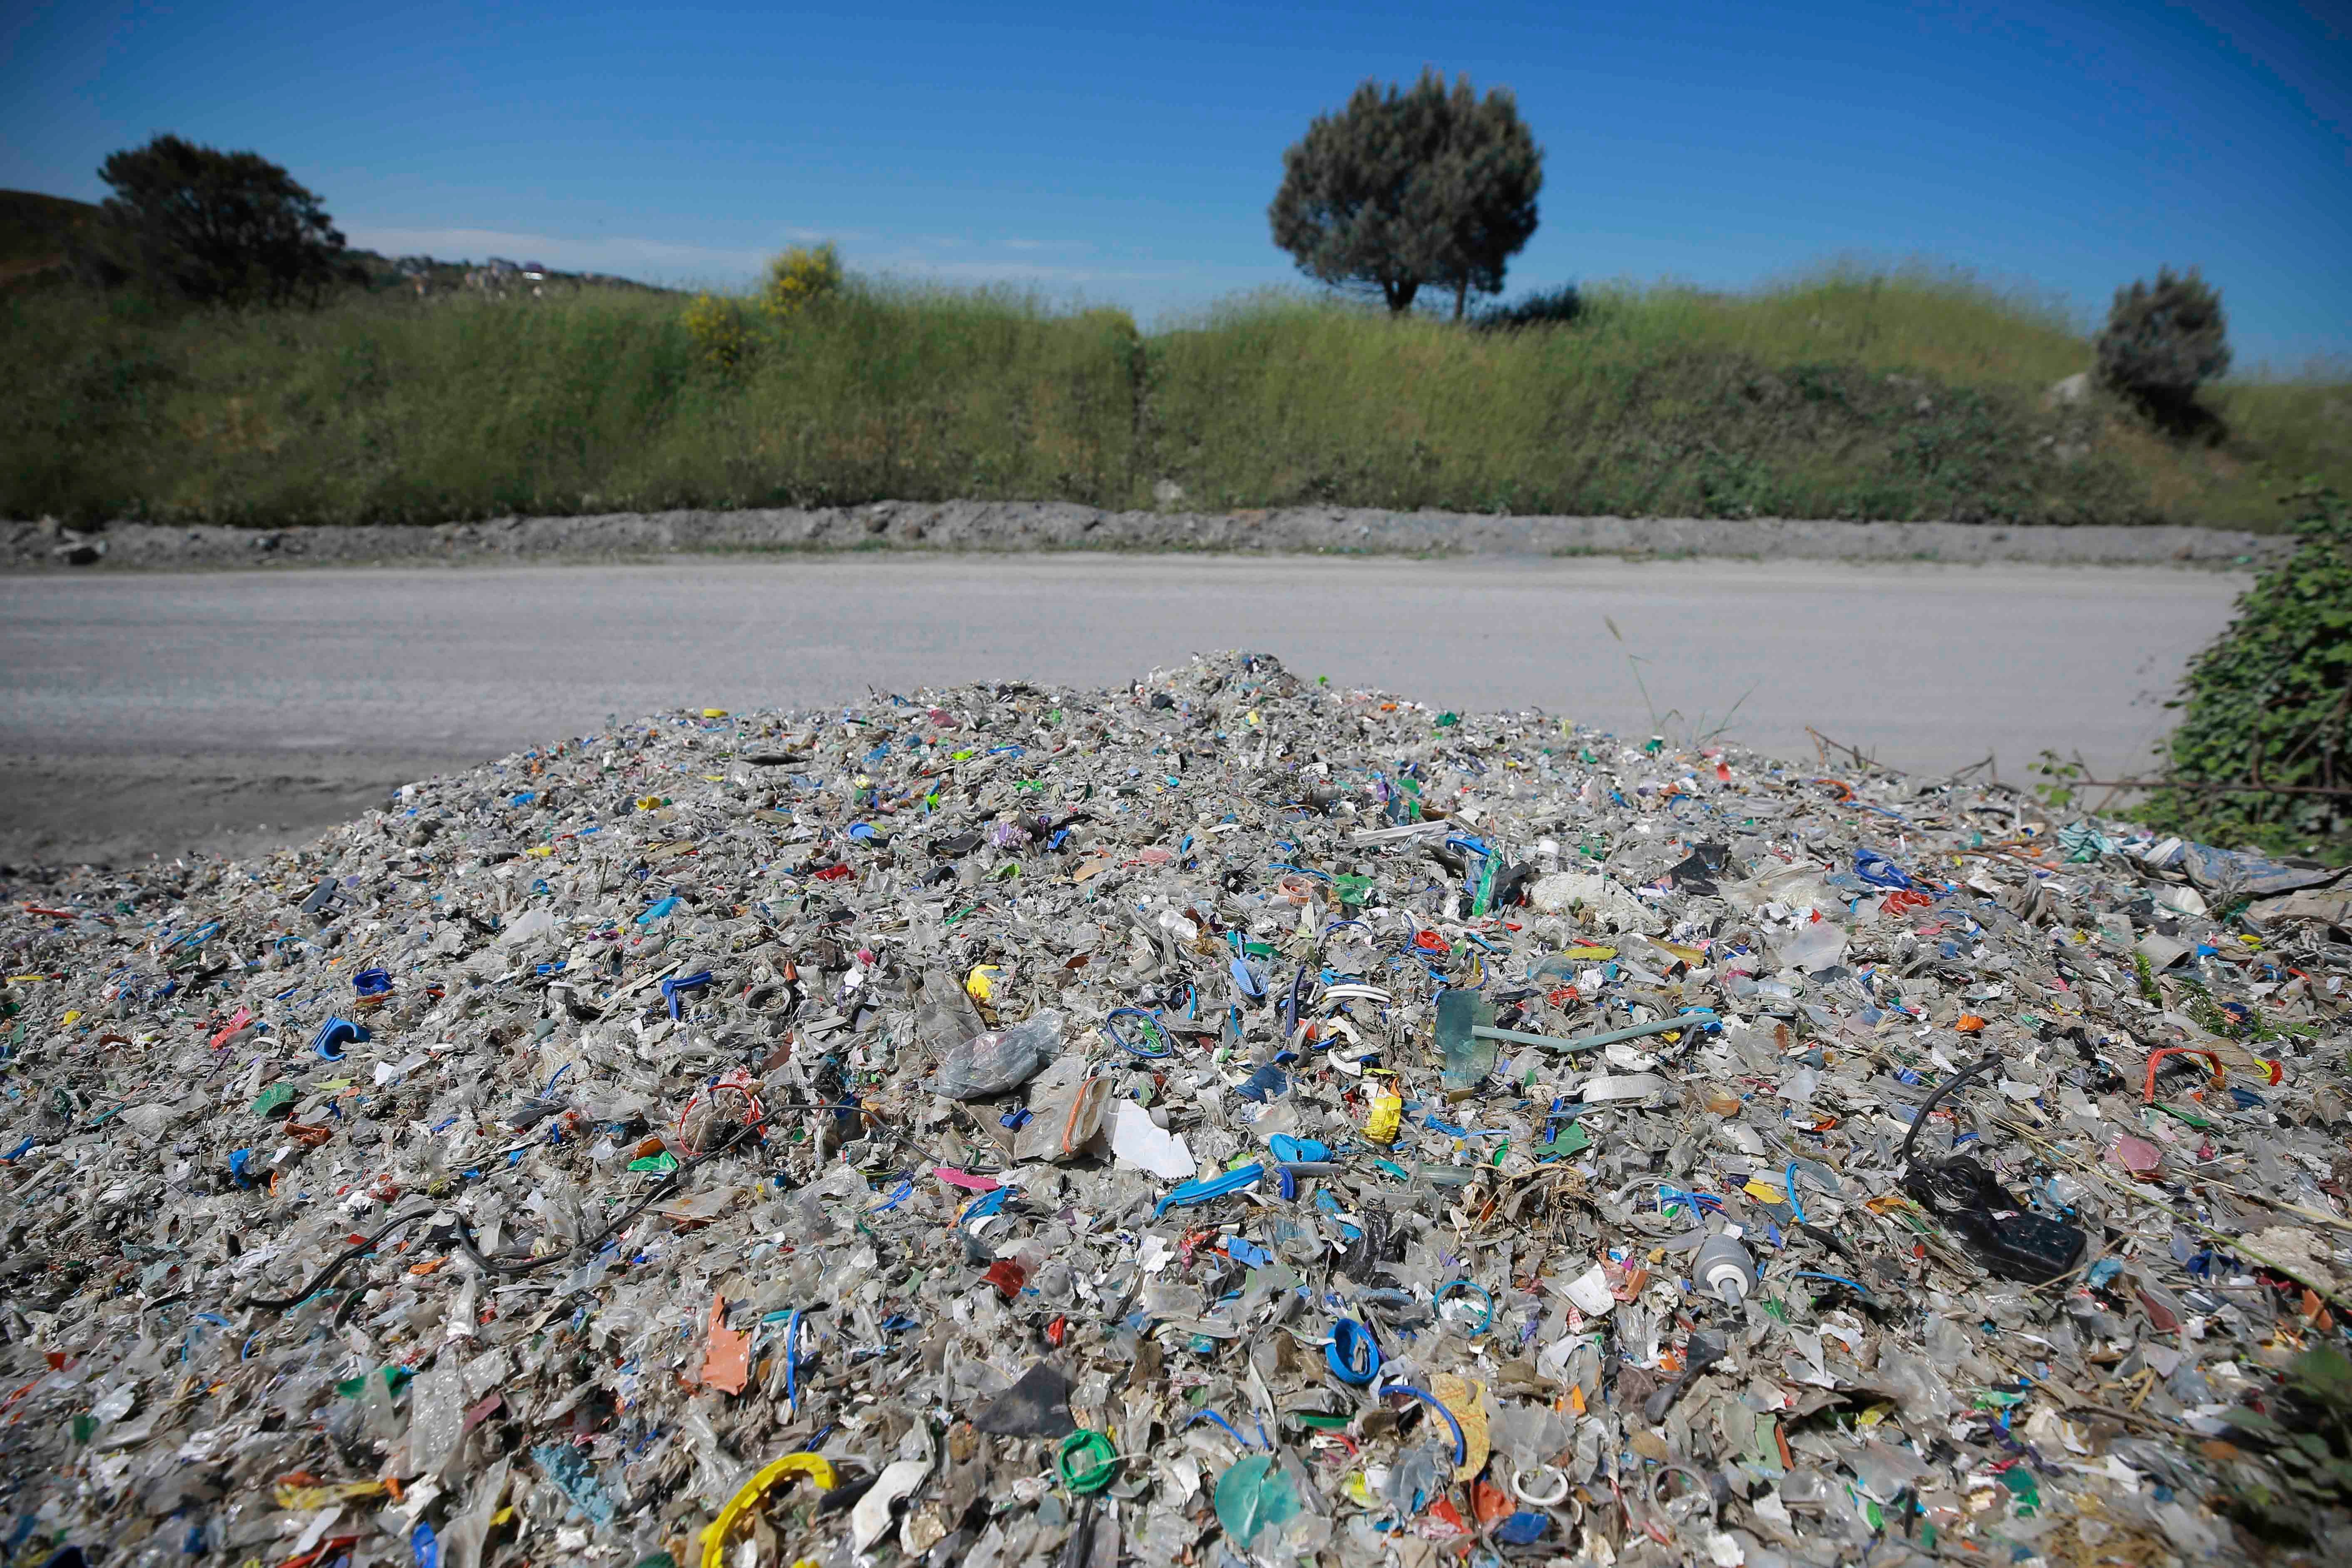 EU Waste Shipment Proposal Takes Steps to Address Plastic Crisis